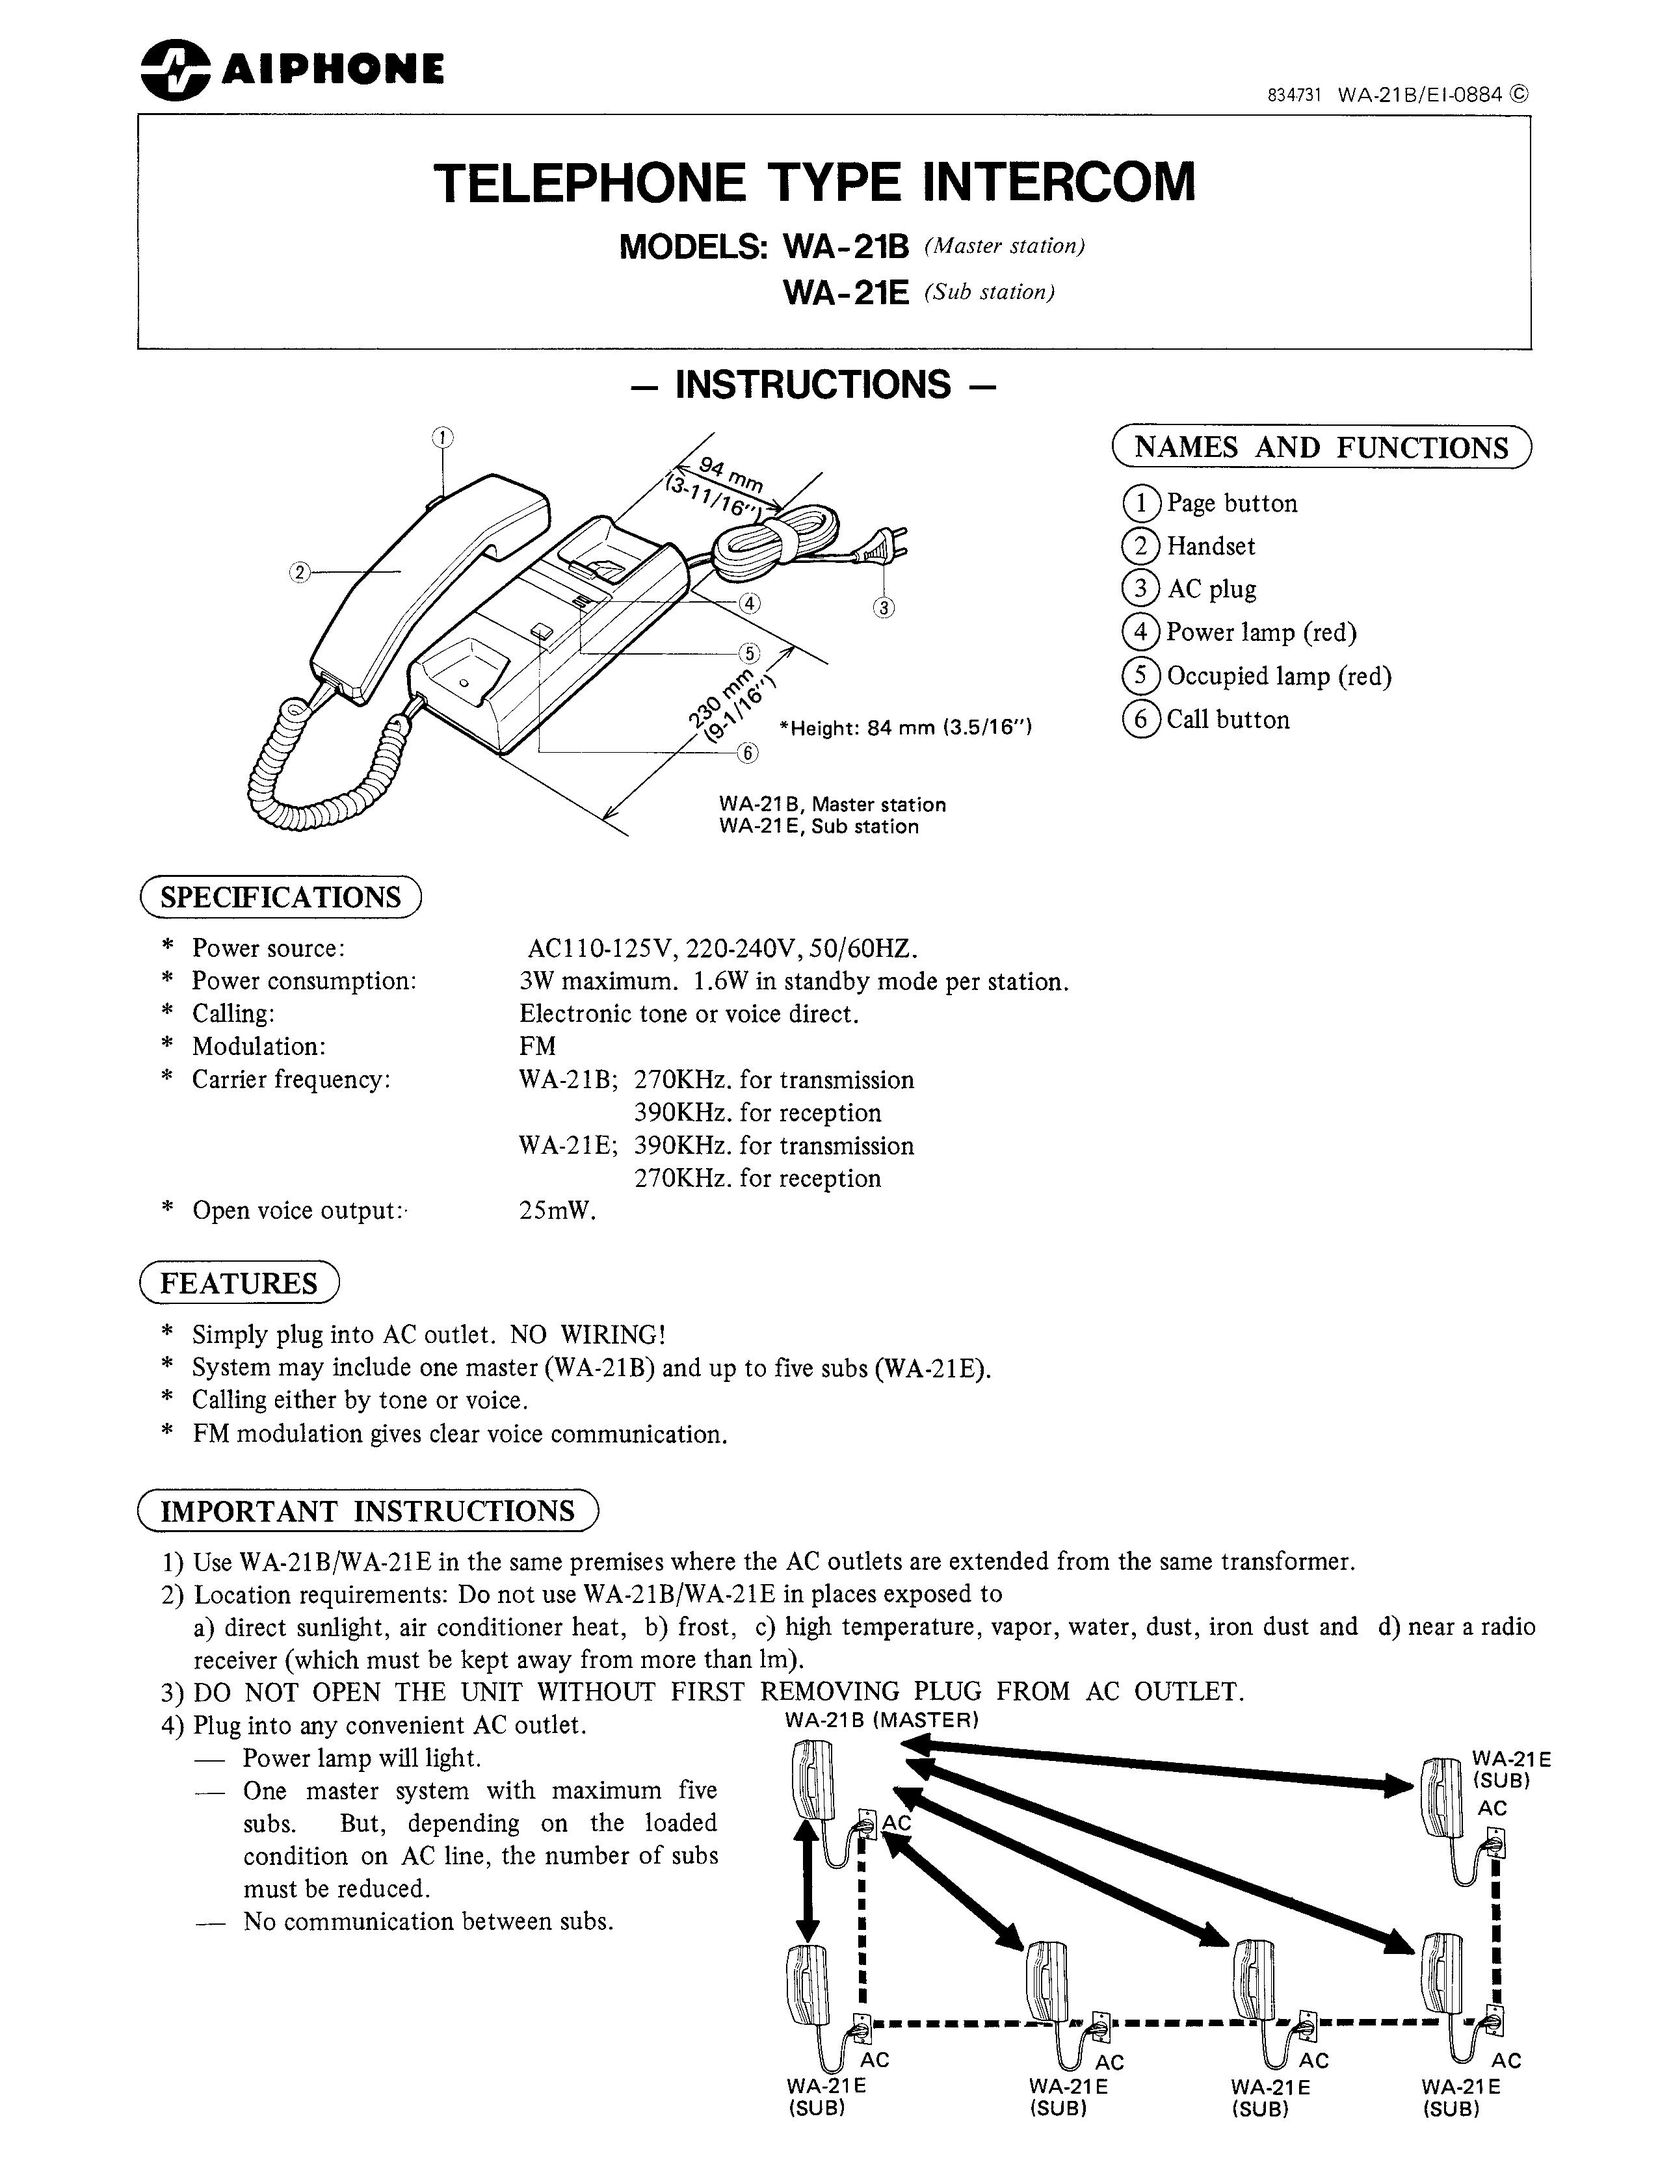 Aiphone WA-21E Telephone User Manual